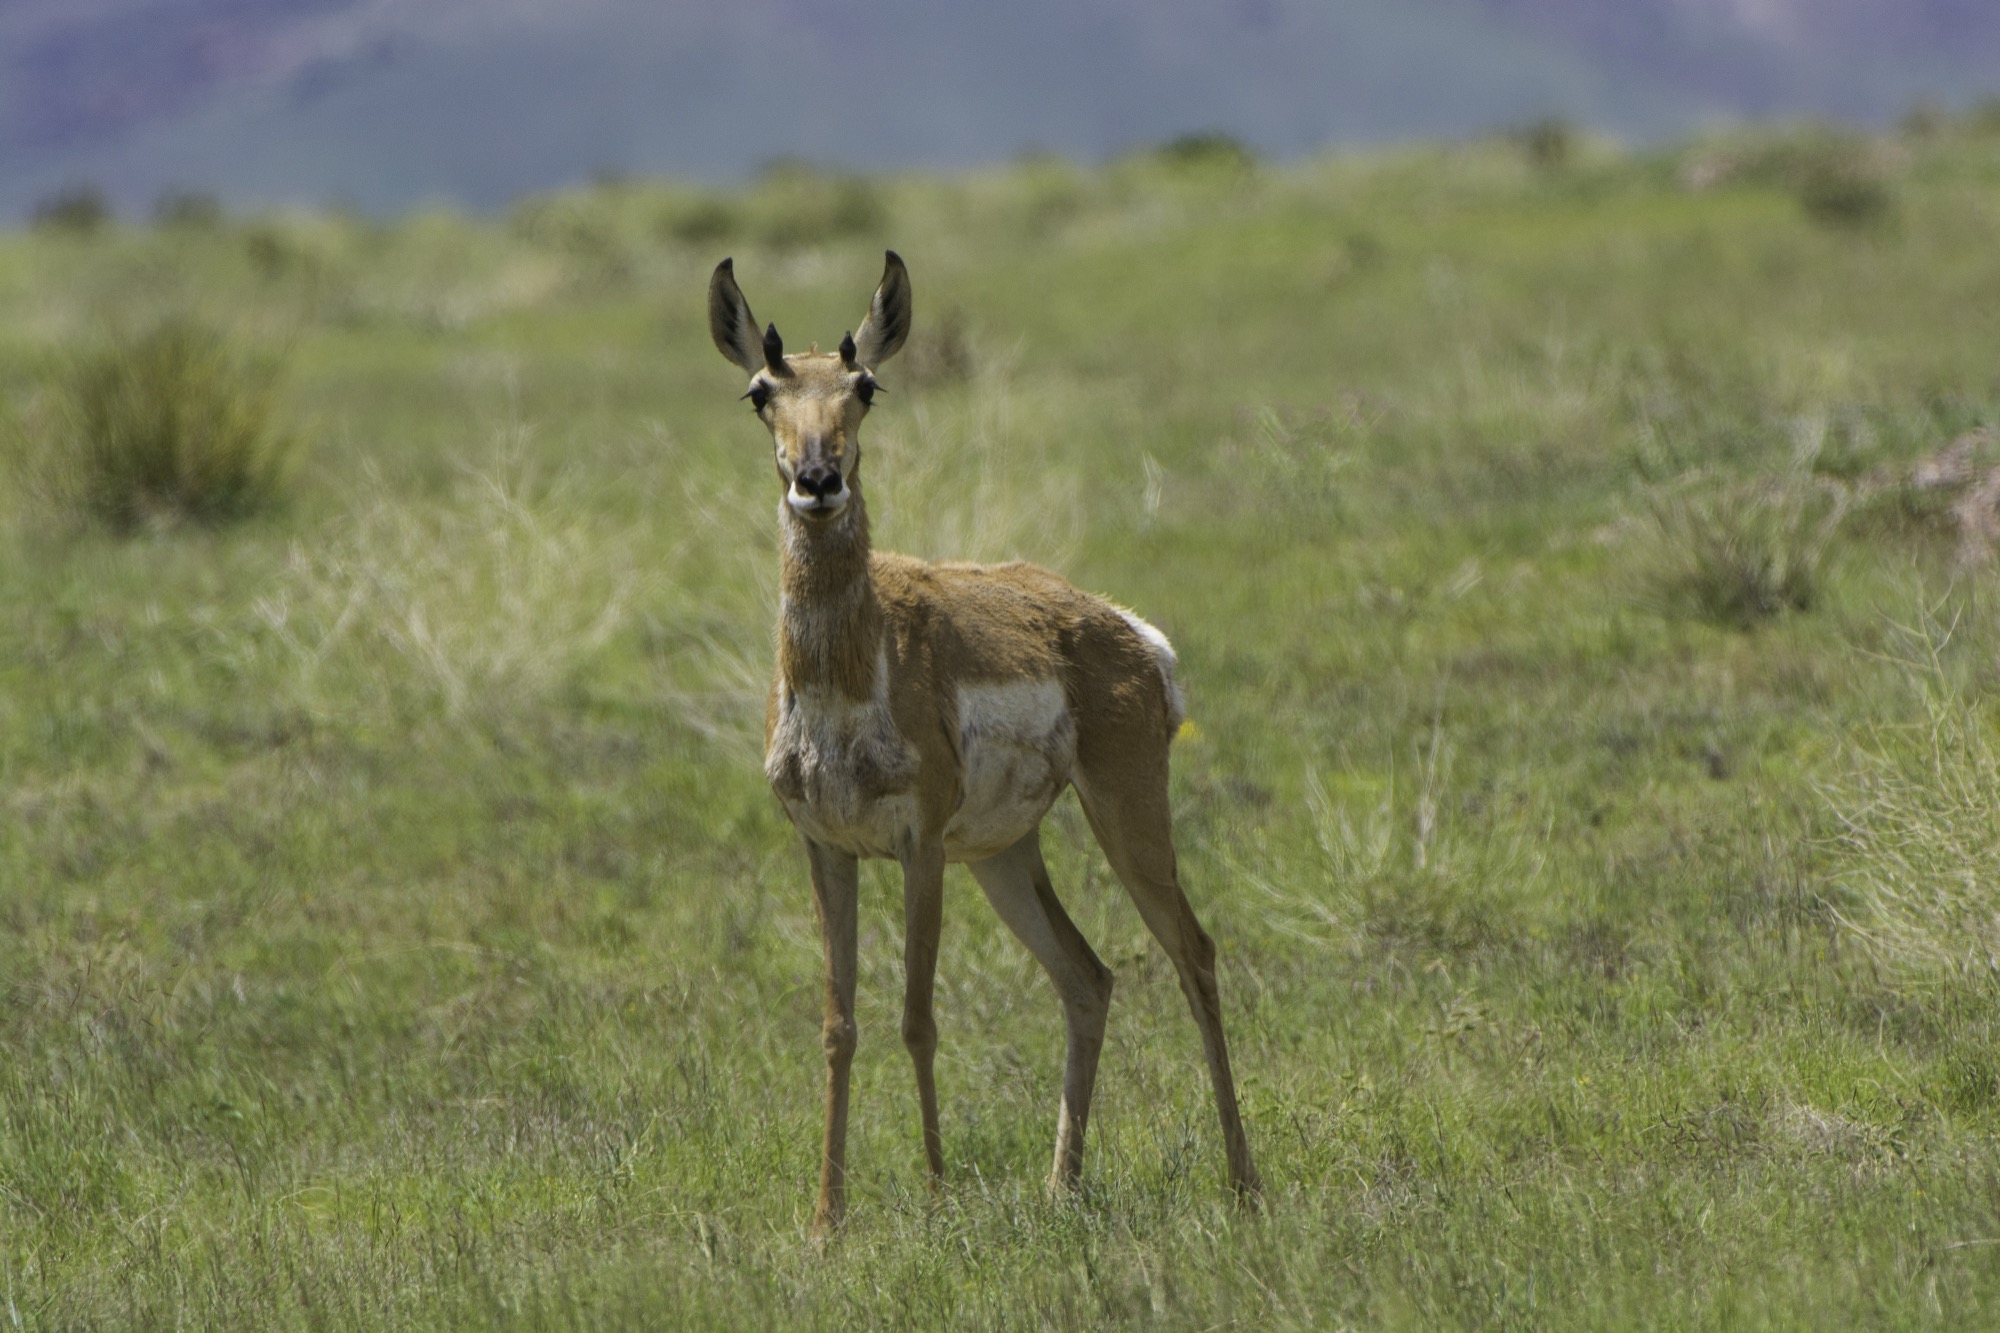 An antlerless antelope in a field